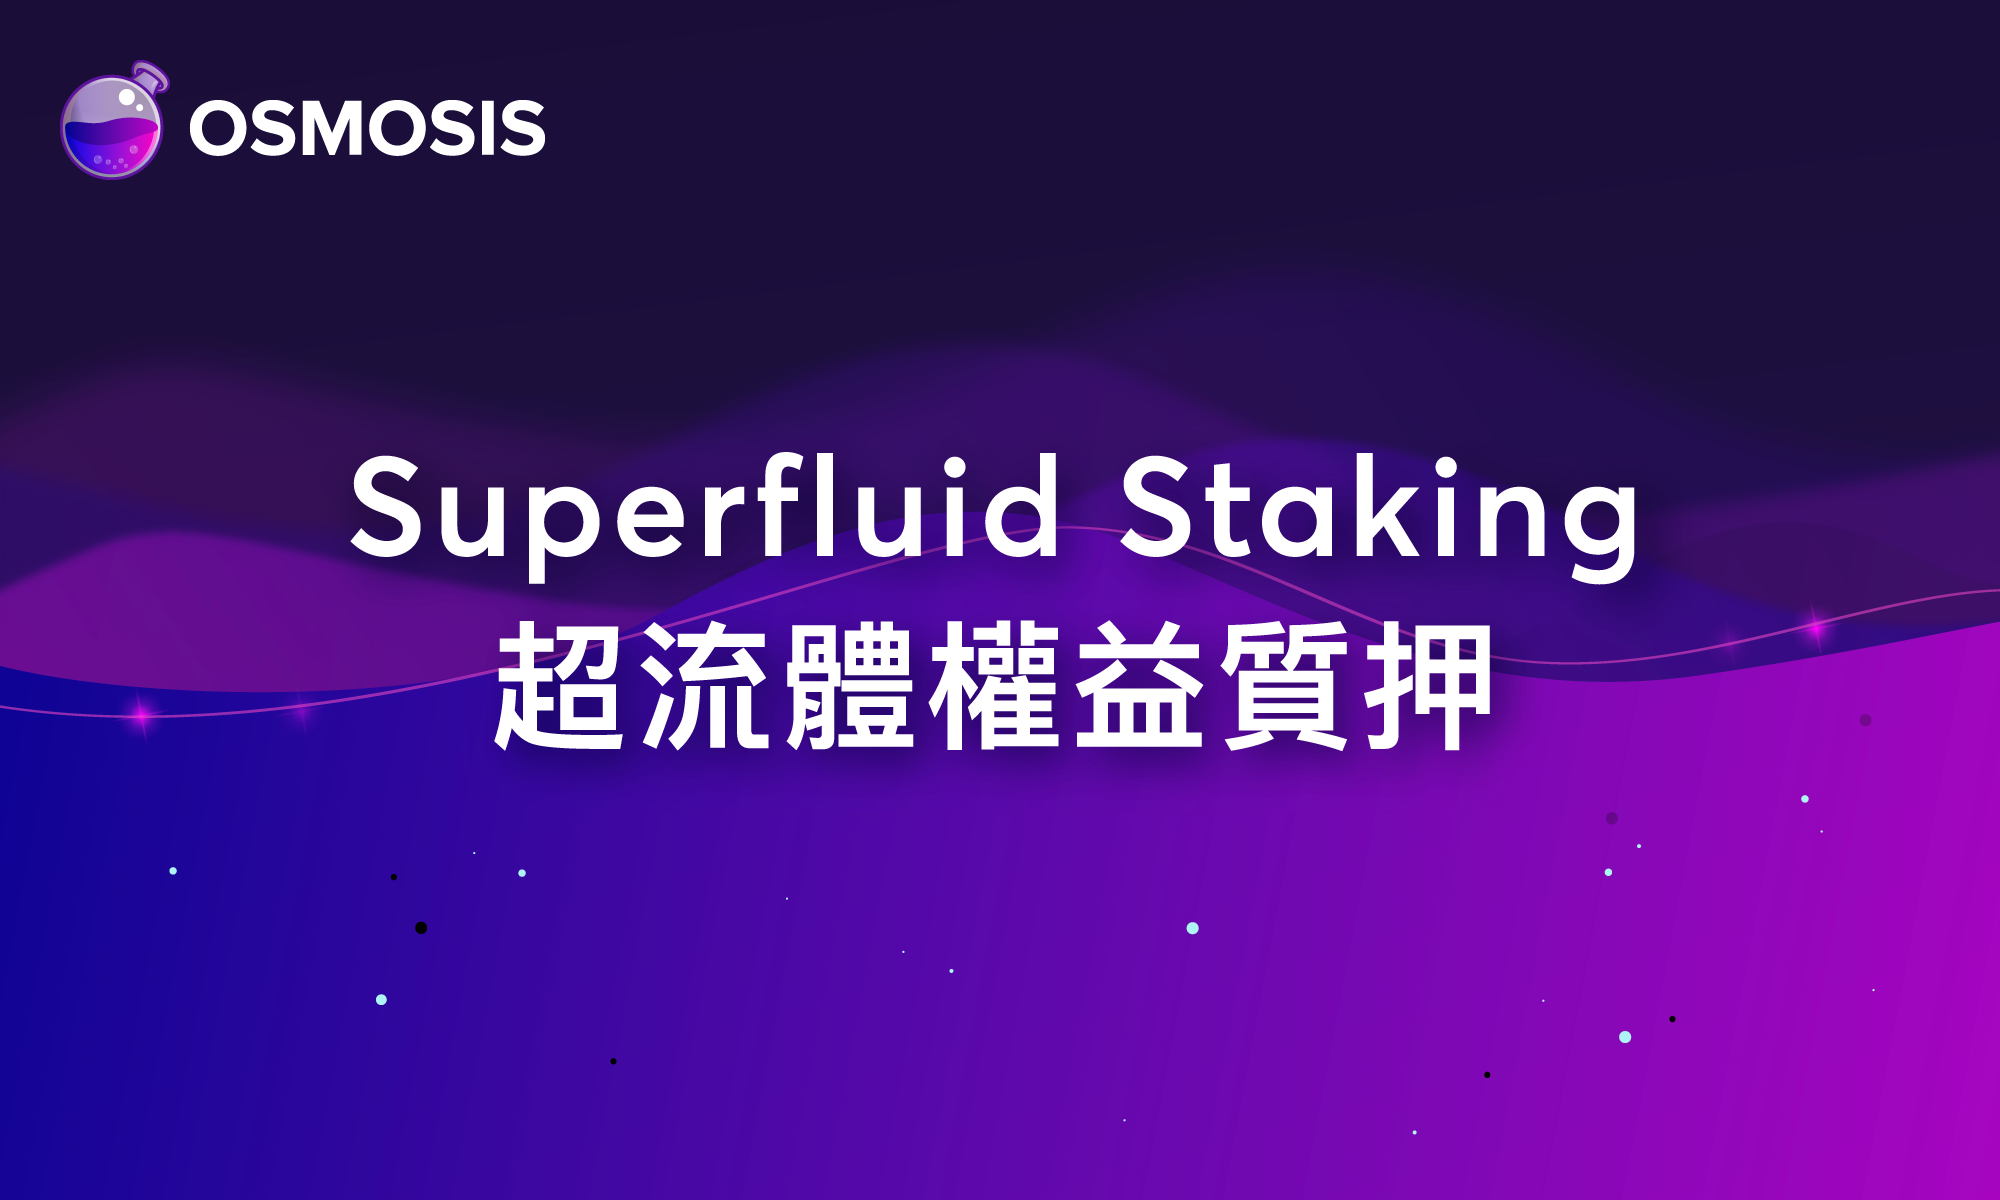 超流體權益質押 Superfluid Staking